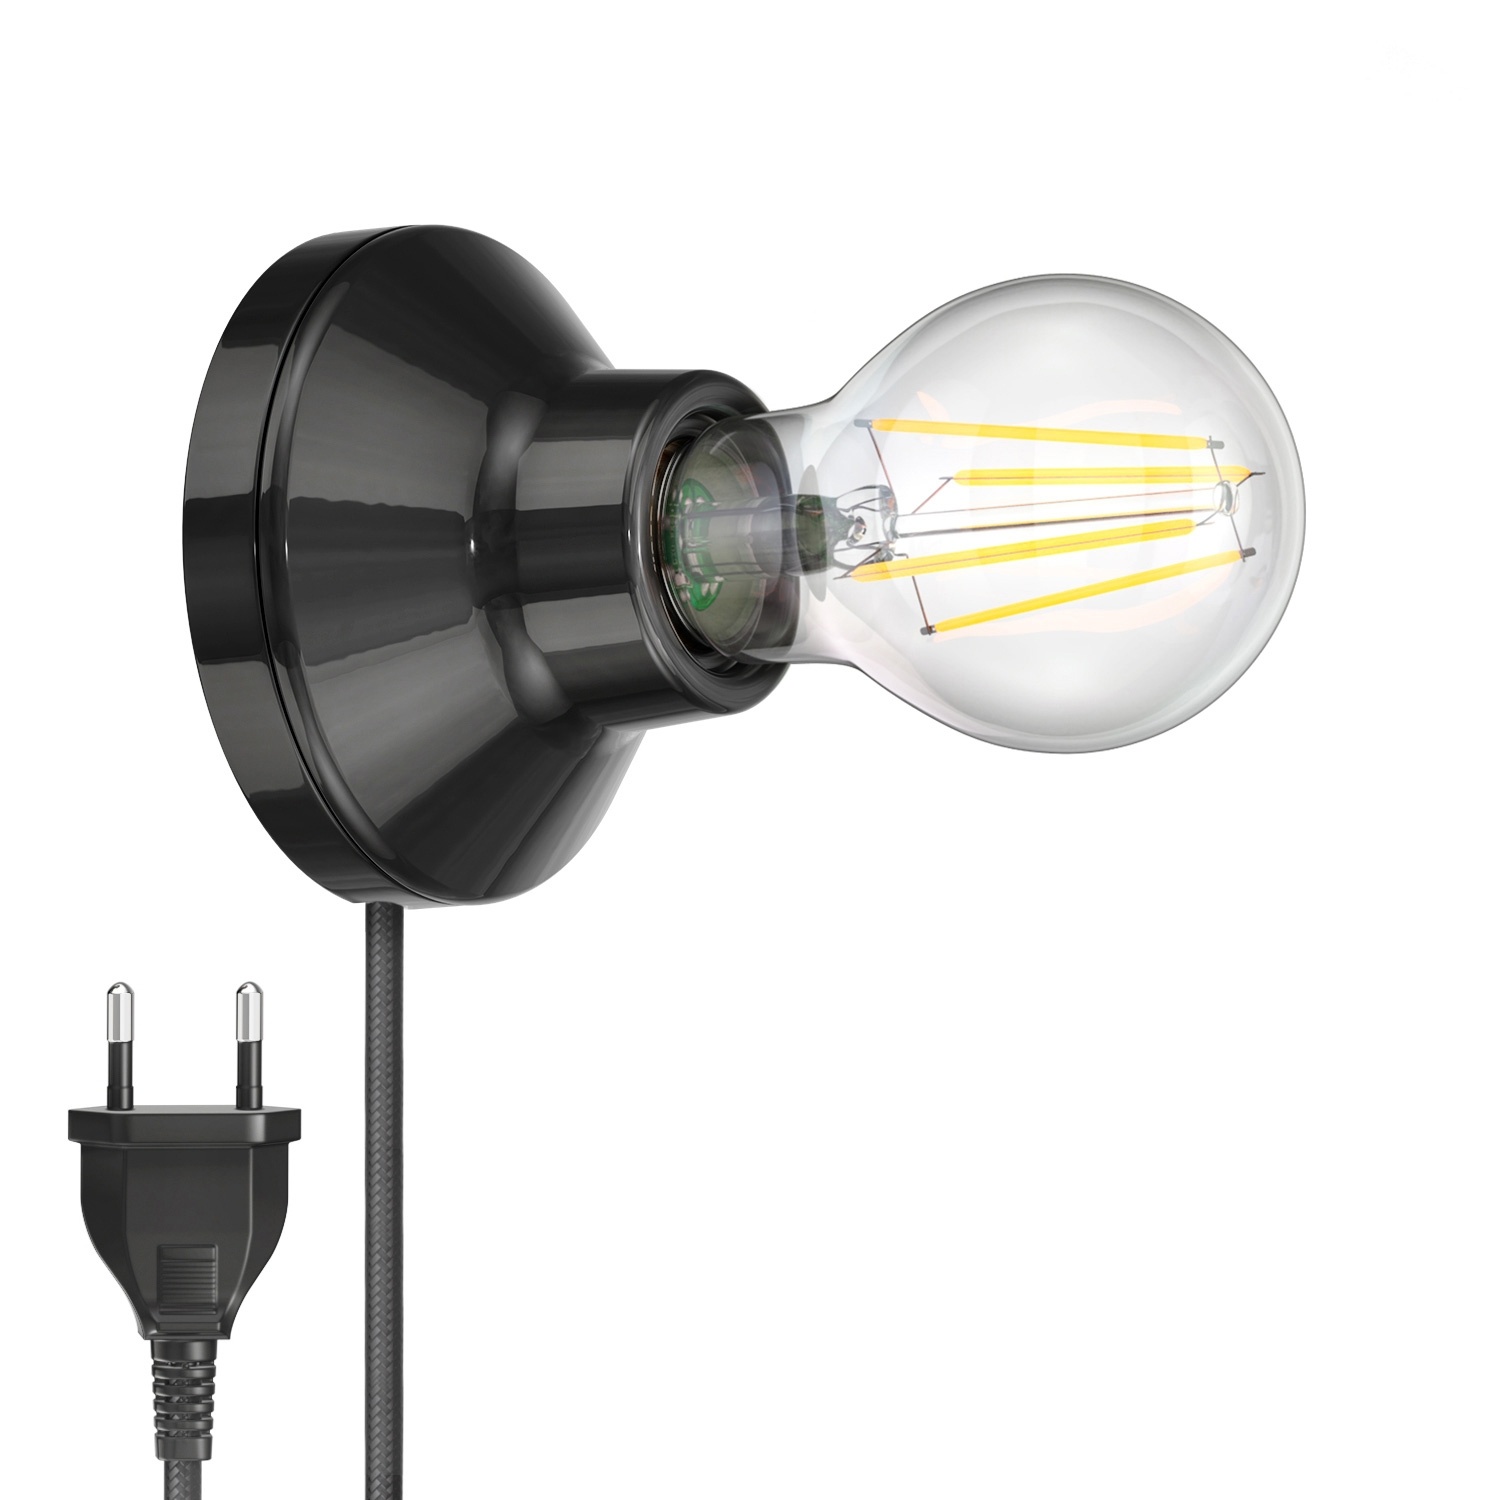 ledscom.de Porzellan Wand-Leuchte Elektra rund Stecker Schalter schwarz 90mm + E27 LED Lampe warmweiß 3-Stufen Dimmen: max. 963lm